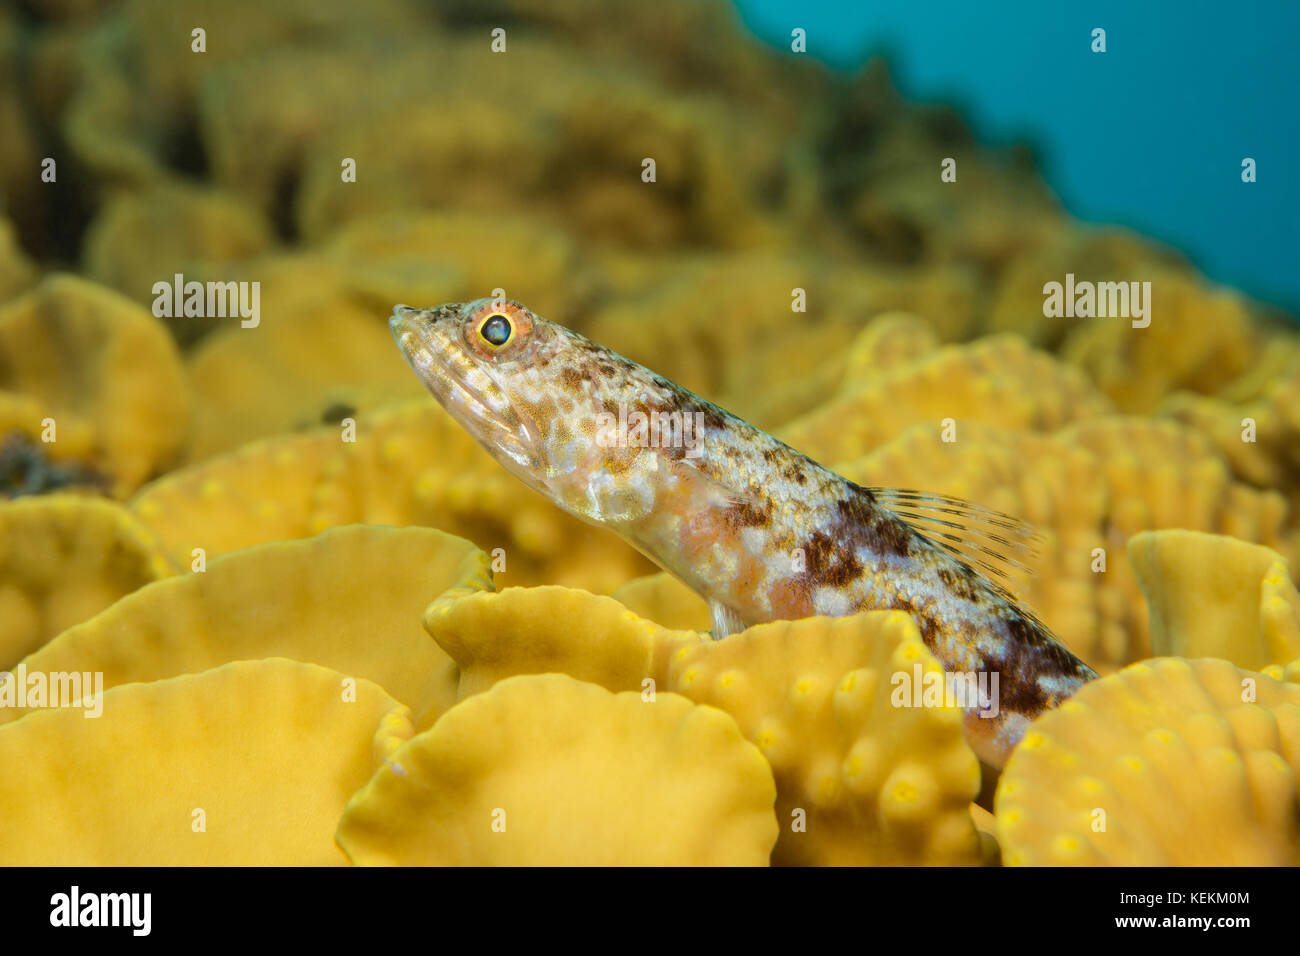 Variegato, lizardfish synodus variegatus, Marsa Alam, Mar Rosso, Egitto Foto Stock